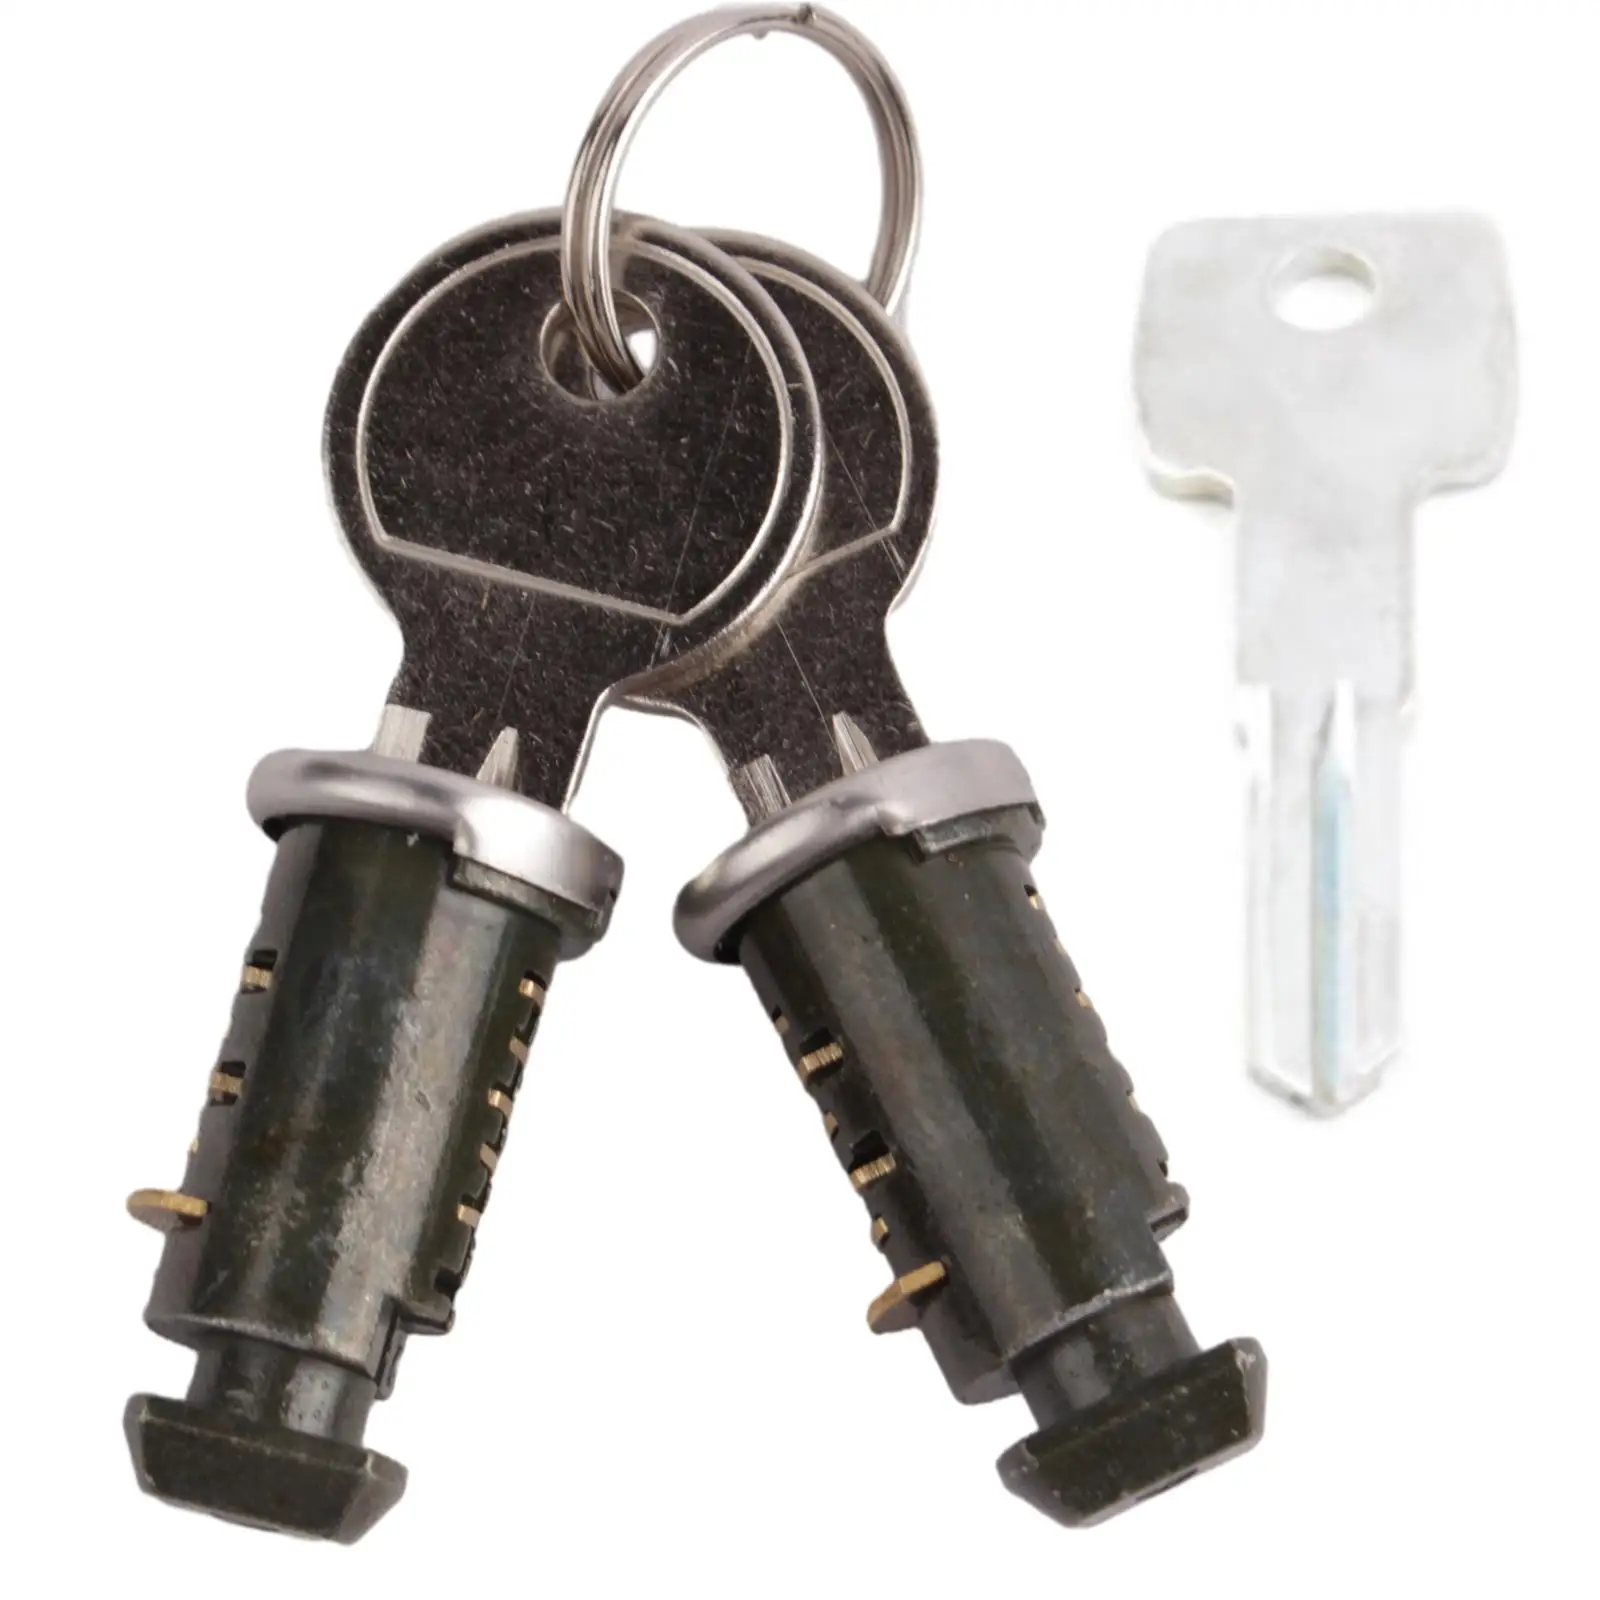 Lock Cylinders for Car Racks System Locks Keys Lock Cores Roof Rack Cross Bars Locks Key Kit for SUV Car Rack Locks durable